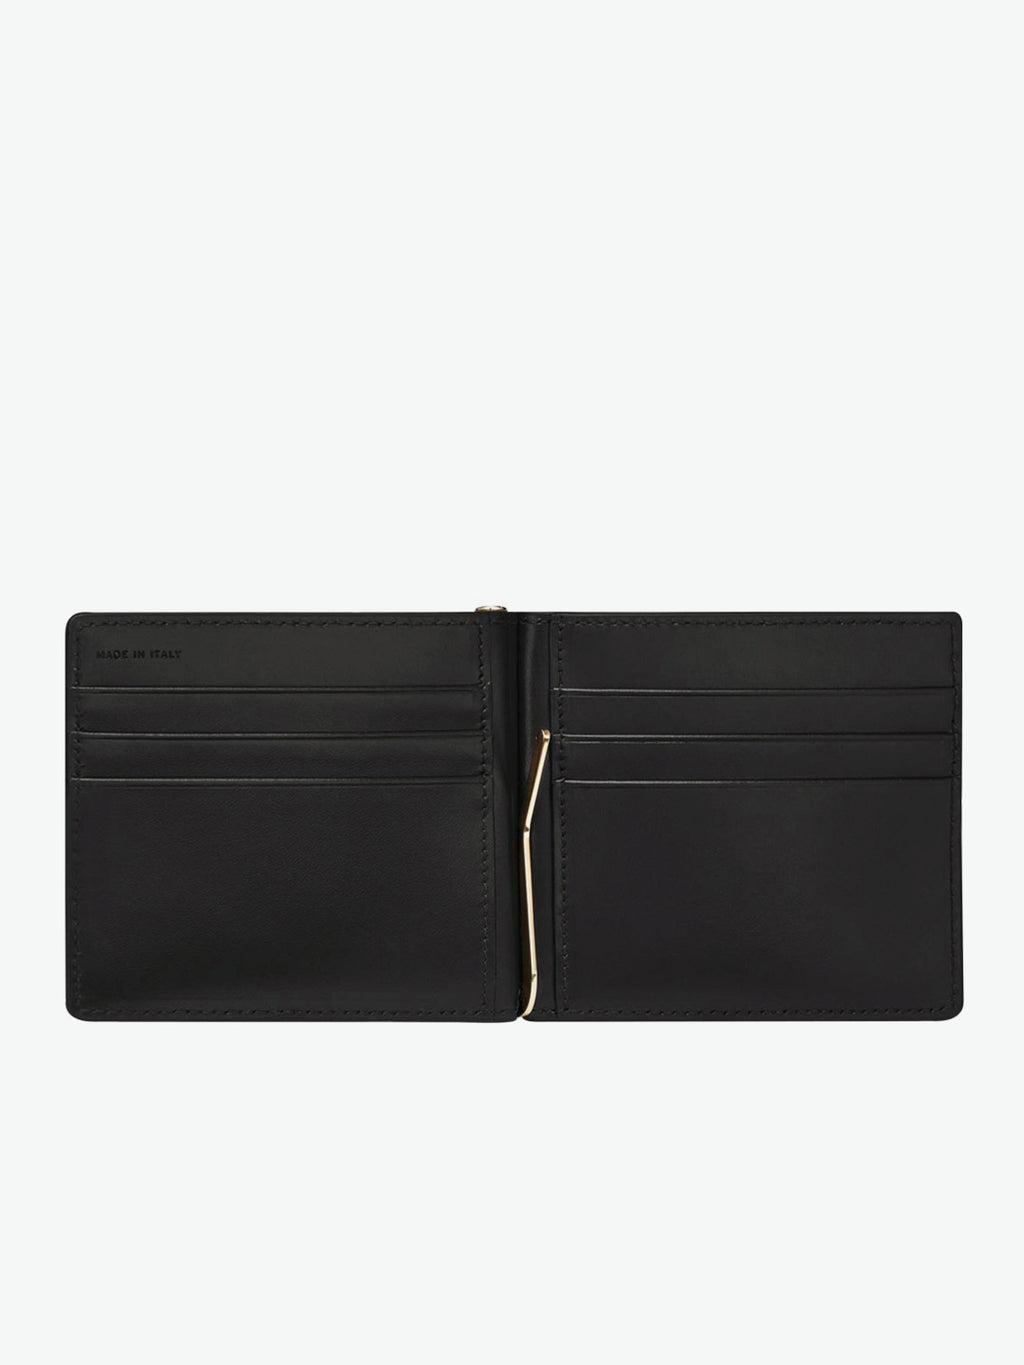 Grain Leather Wallet With Money Clip in Black - Saint Laurent